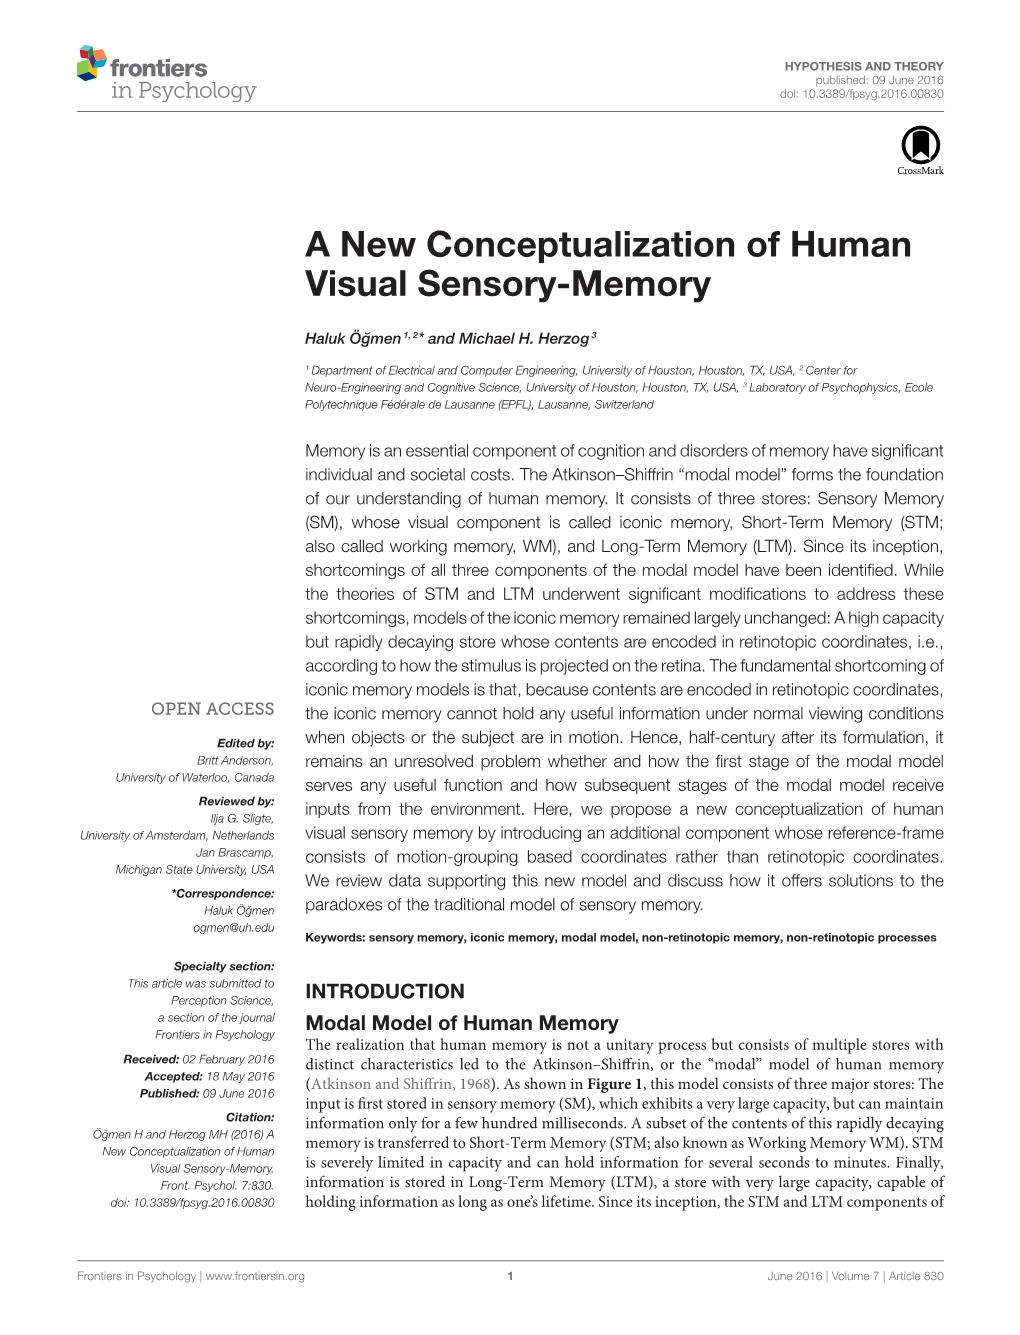 A New Conceptualization of Human Visual Sensory-Memory